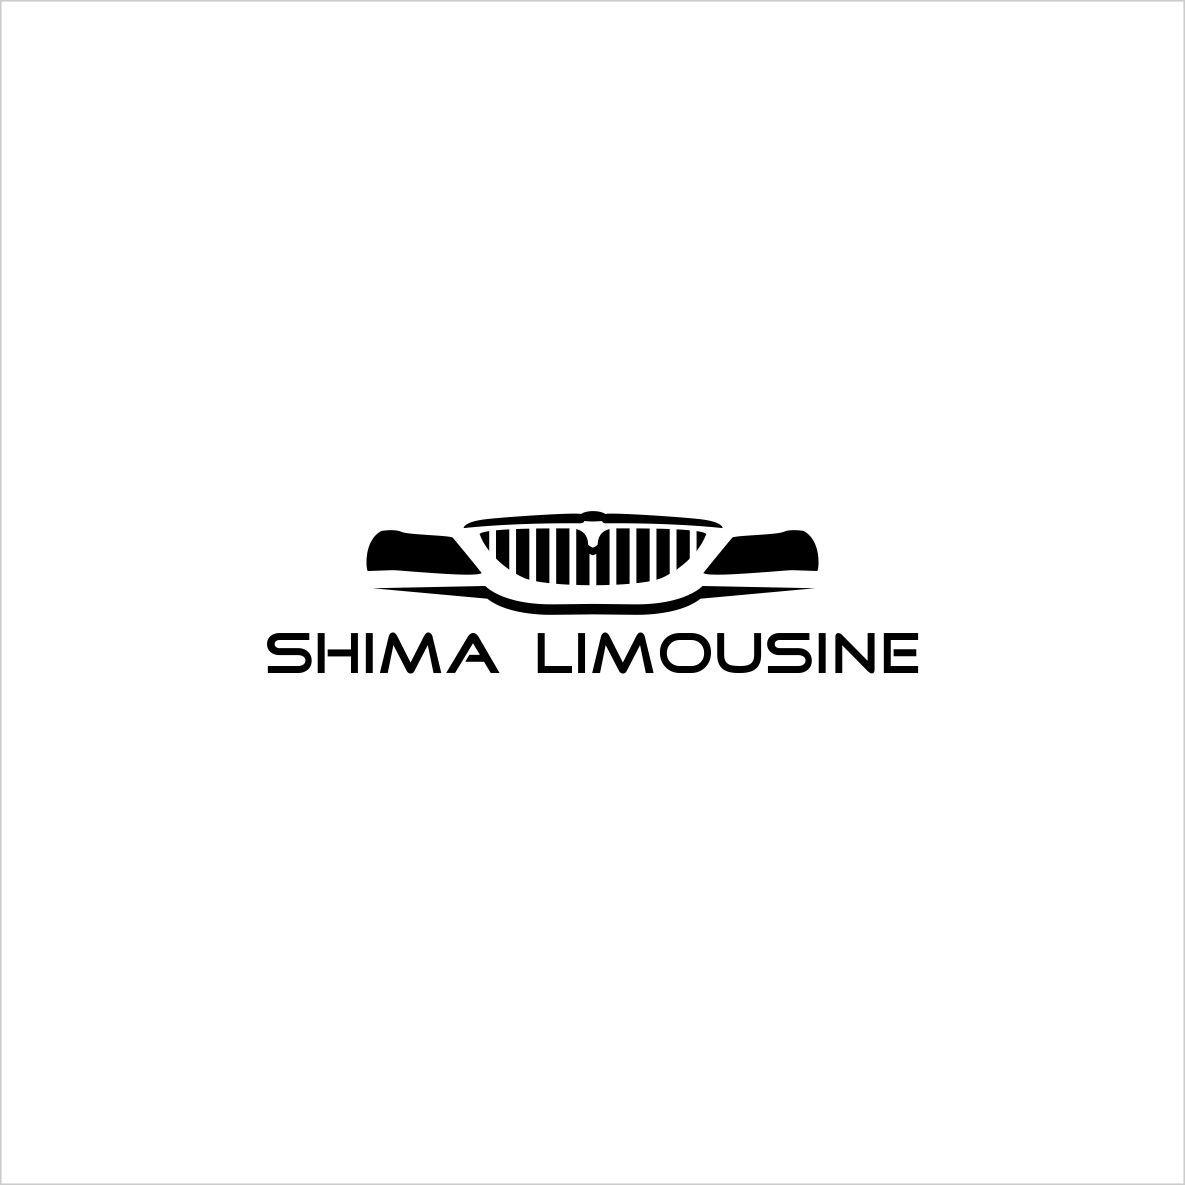 Limousine Logo - Elegant, Playful, It Company Logo Design for Shima Limousine